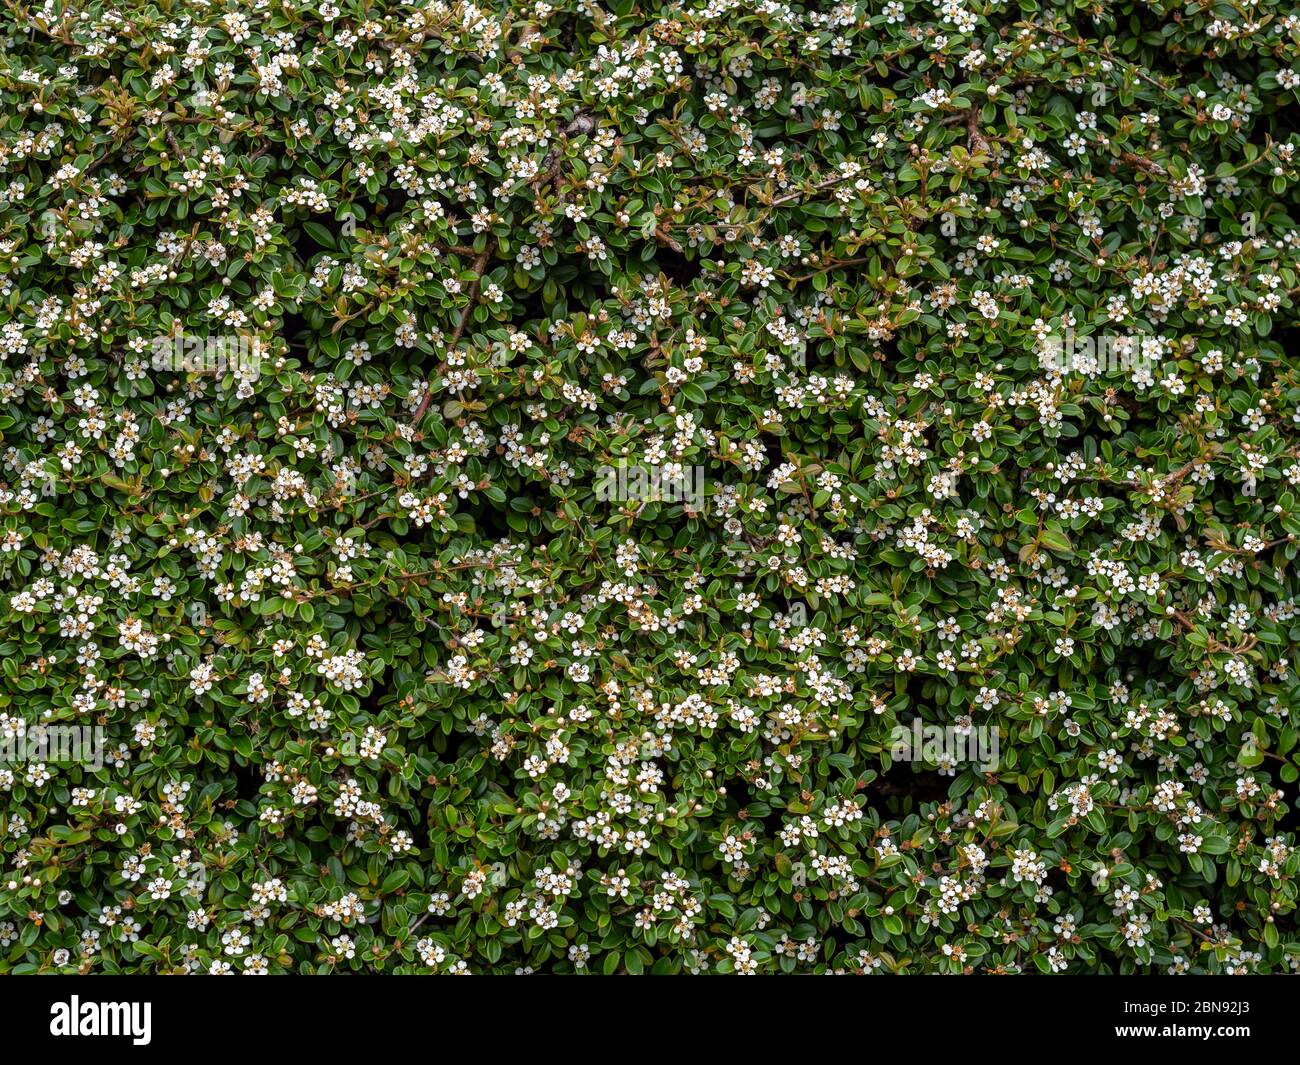 Cotoneaster horizontalis, garden shrub, plant in flower. Beautiful groundcover but non native invasive. Stock Photo